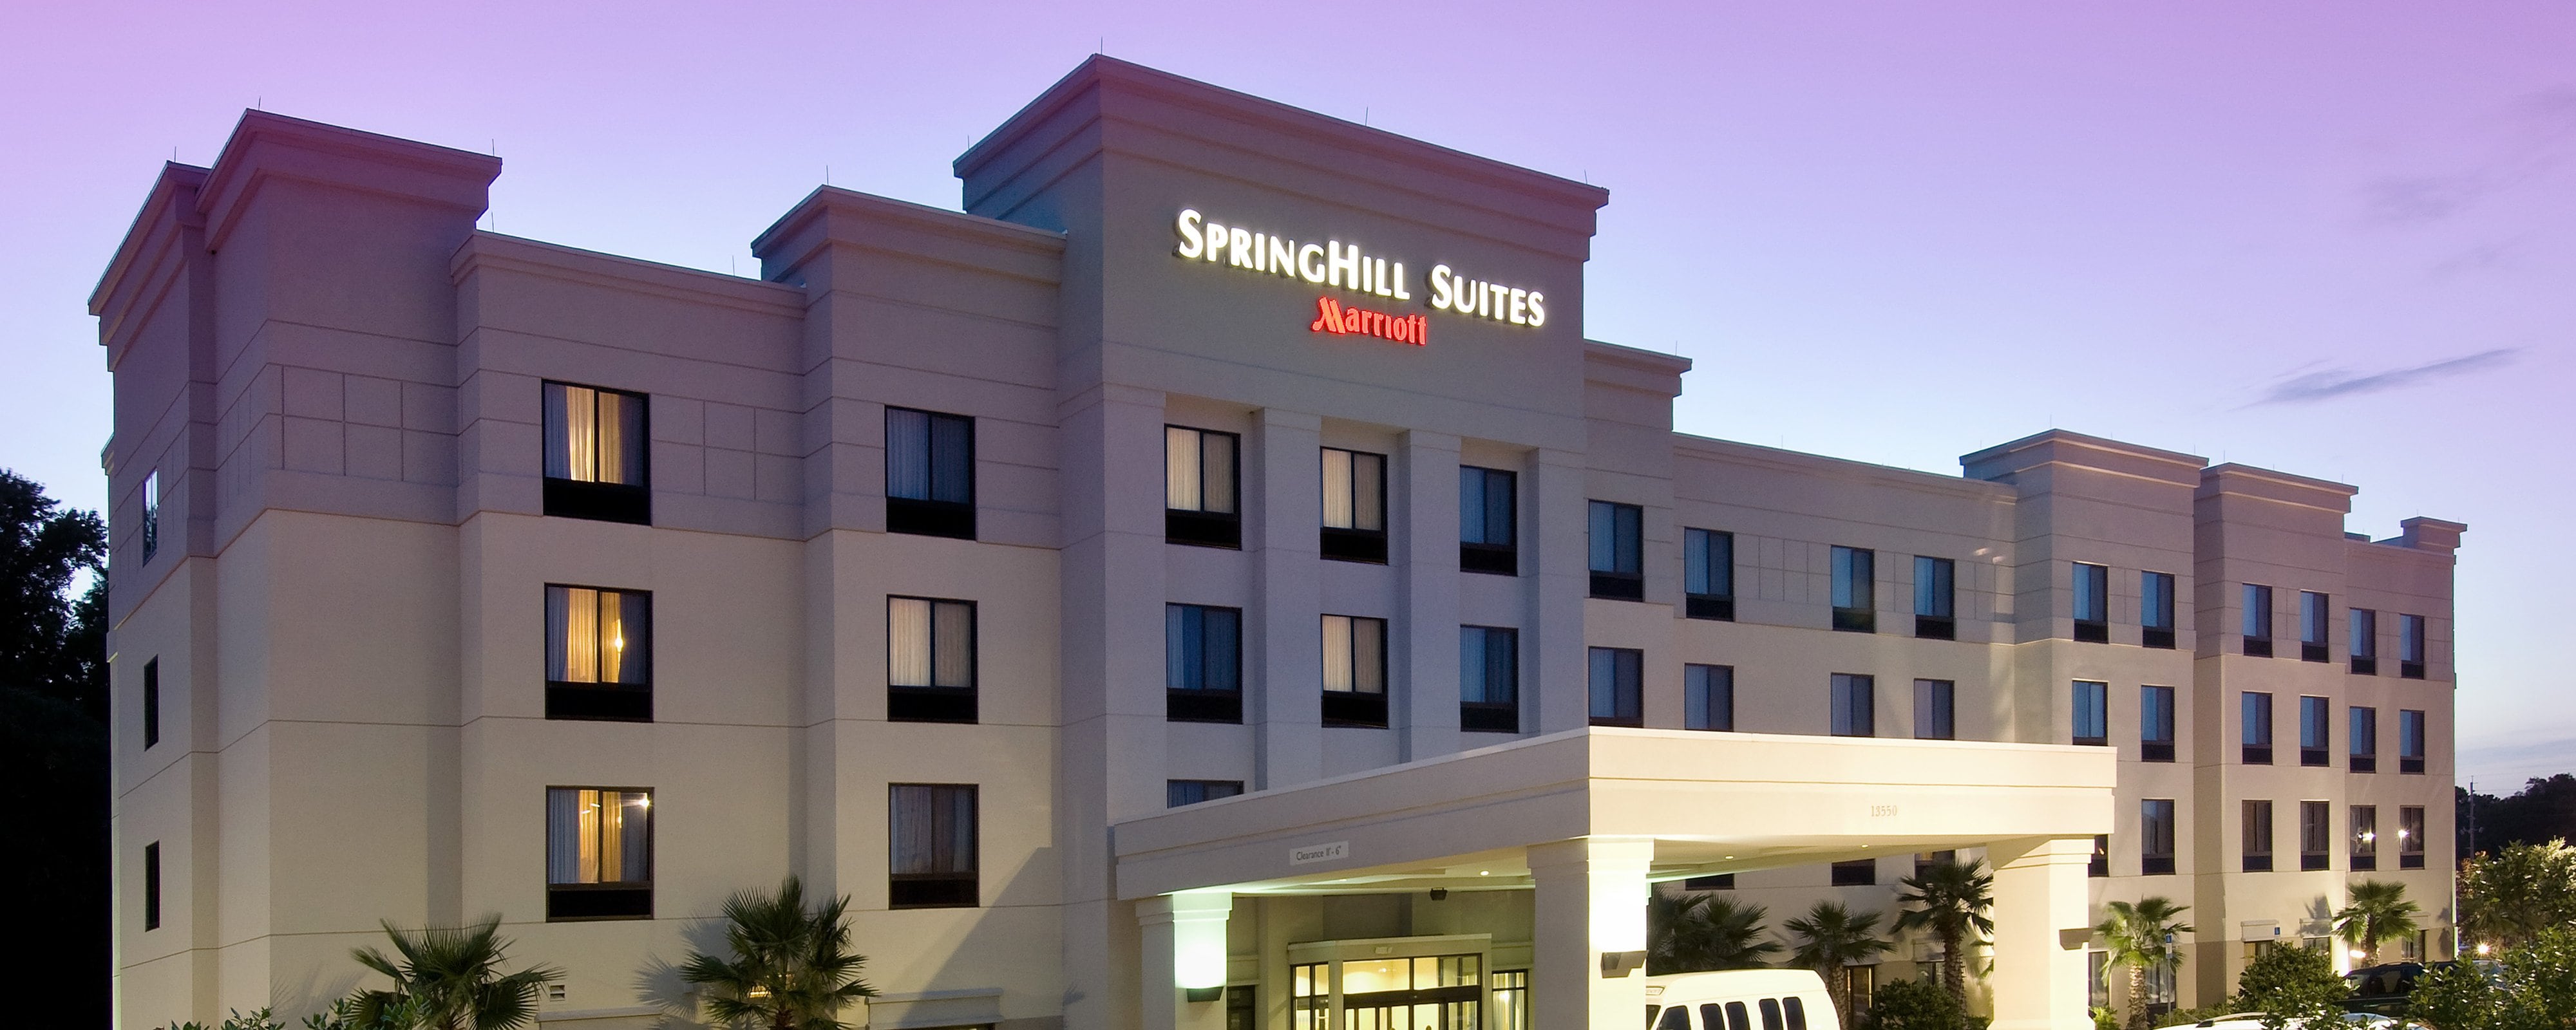 Suite H  tel SpringHill Suites Jacksonville Airport Jacksonville